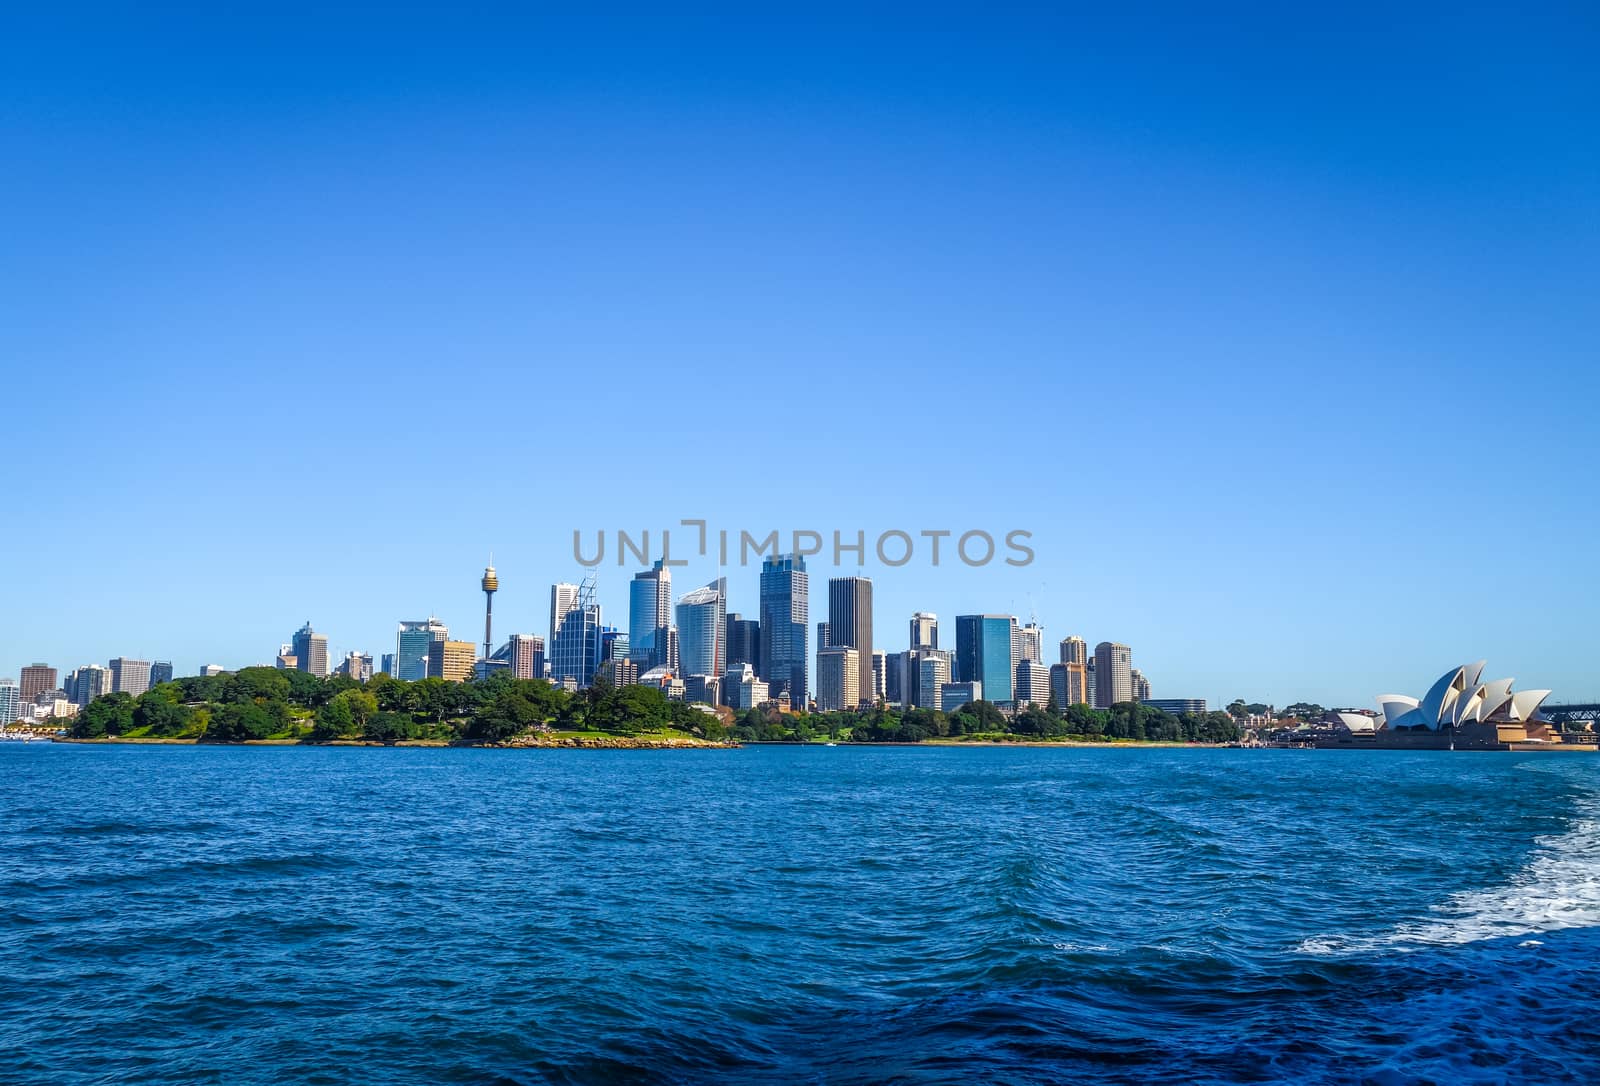 Sydney city center and Opera House, Australia by daboost